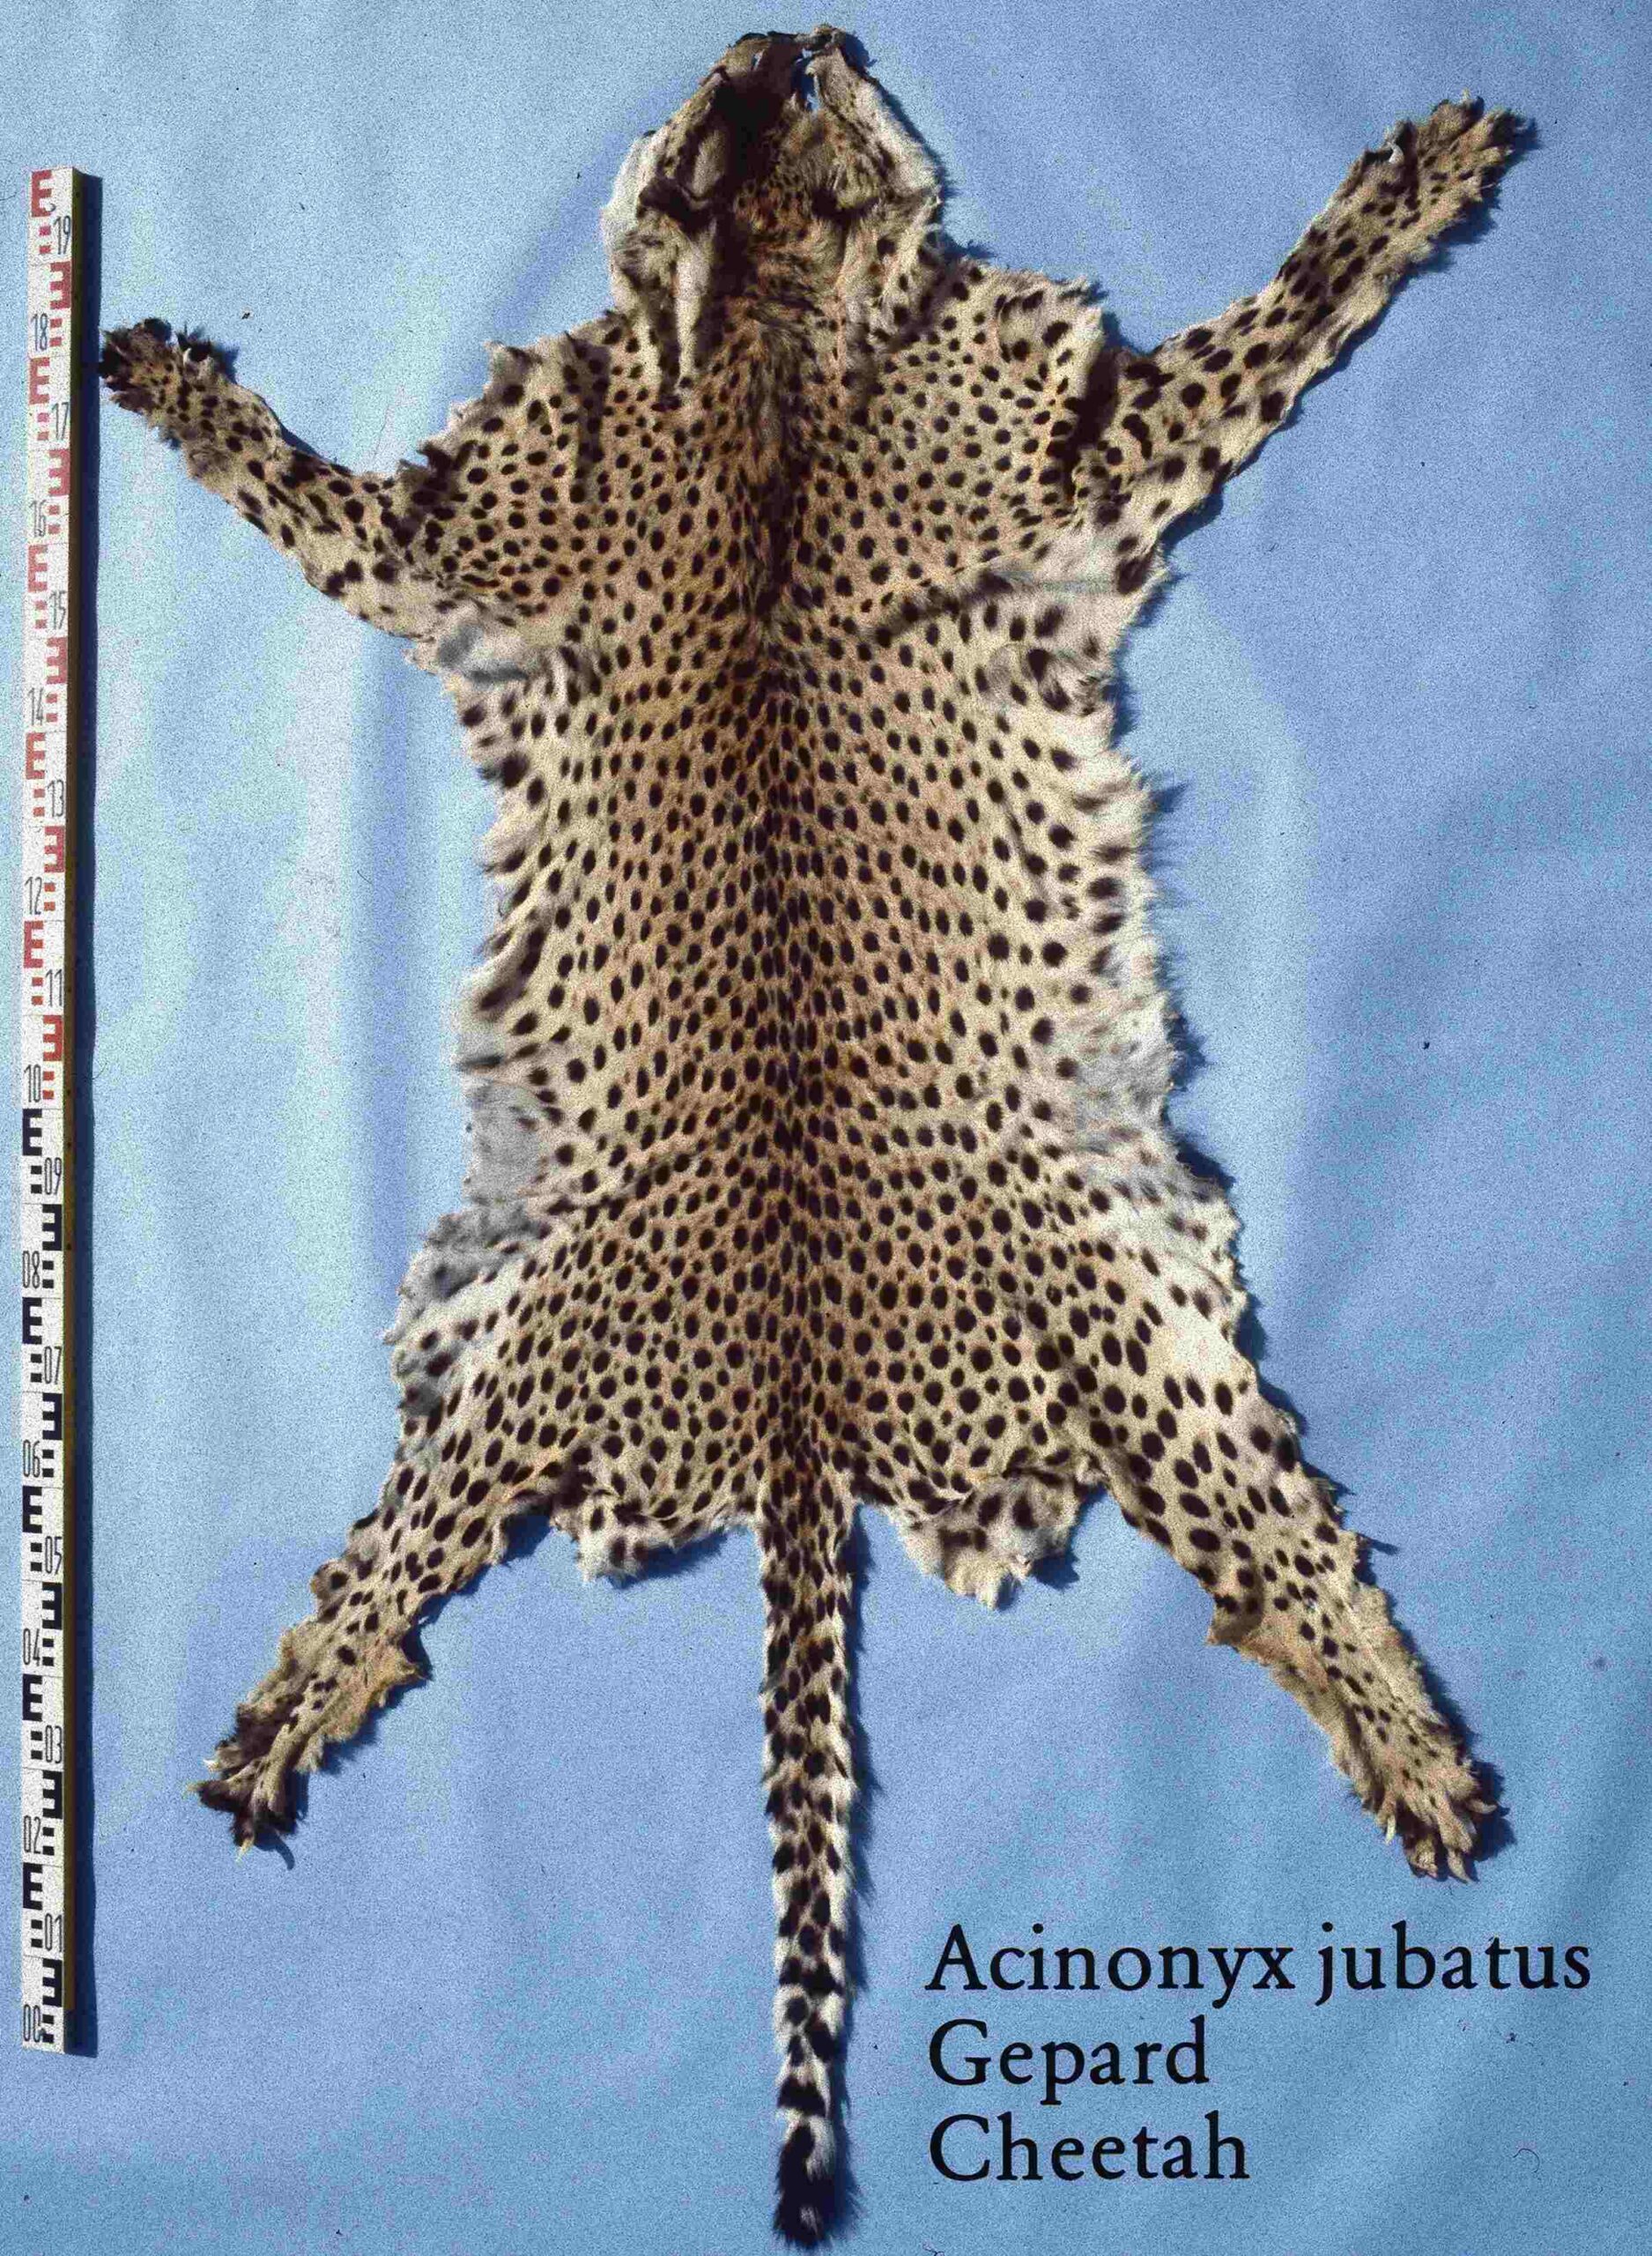 Mountain Lion Vs Cheetah: Poaching for Their Fur Affects The Wild Cheetah Population (Credit: Mickey Bohnacker, Presse-Fotograf, Frankfurt/Main 1978)